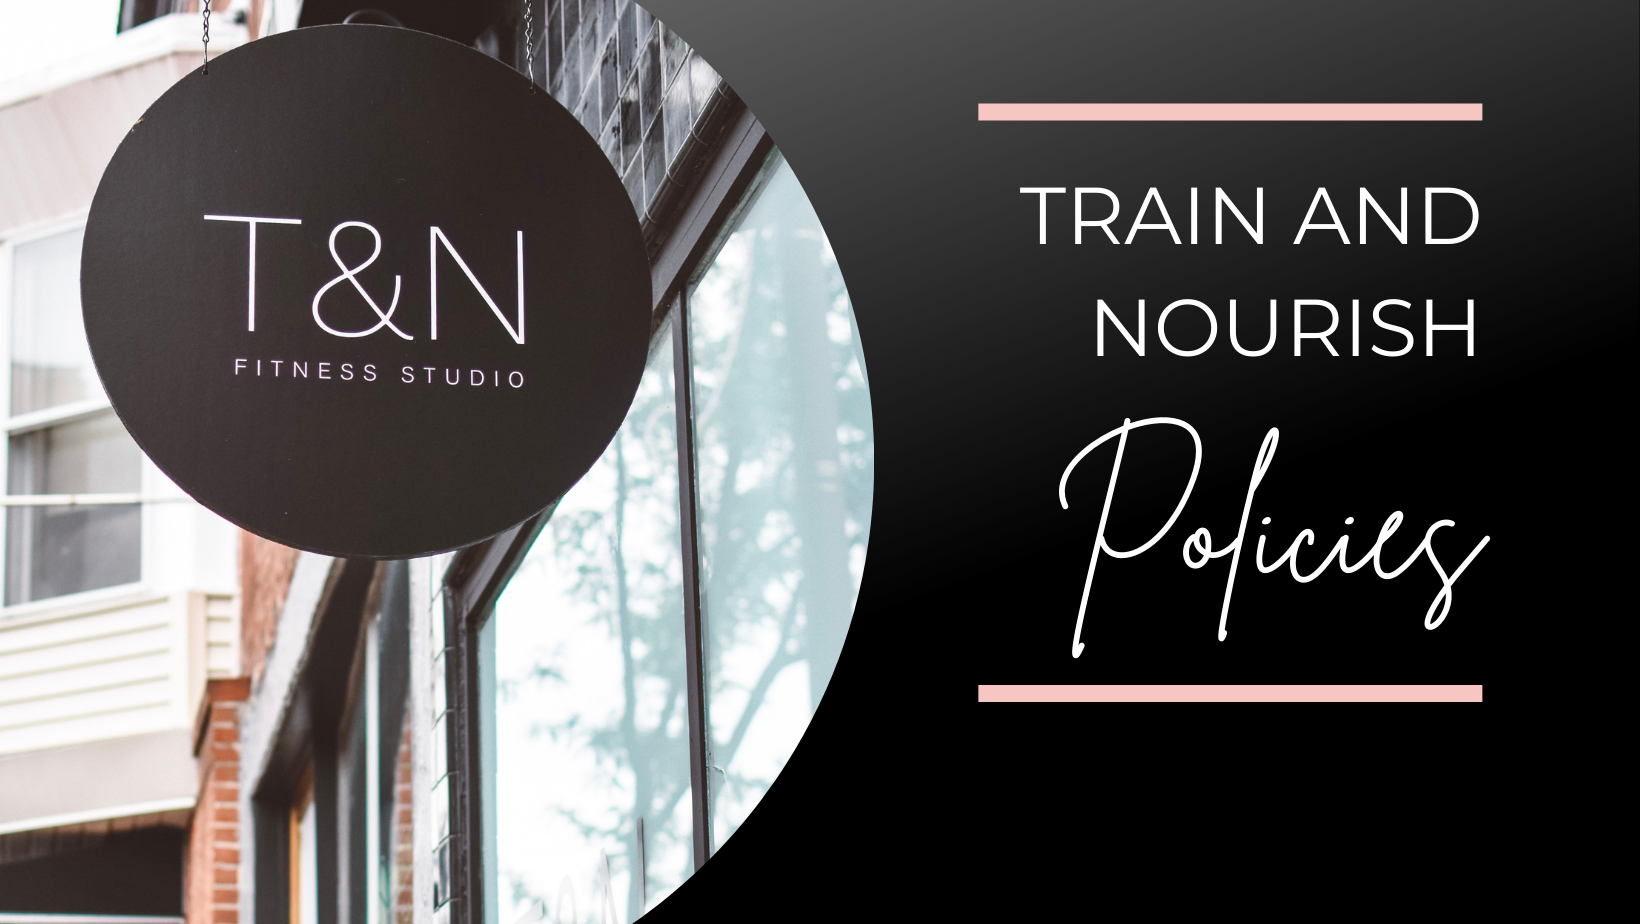 Train and nourish Fitness Studio in East Passyunk, Ardmore, Fishtown and Fairmount